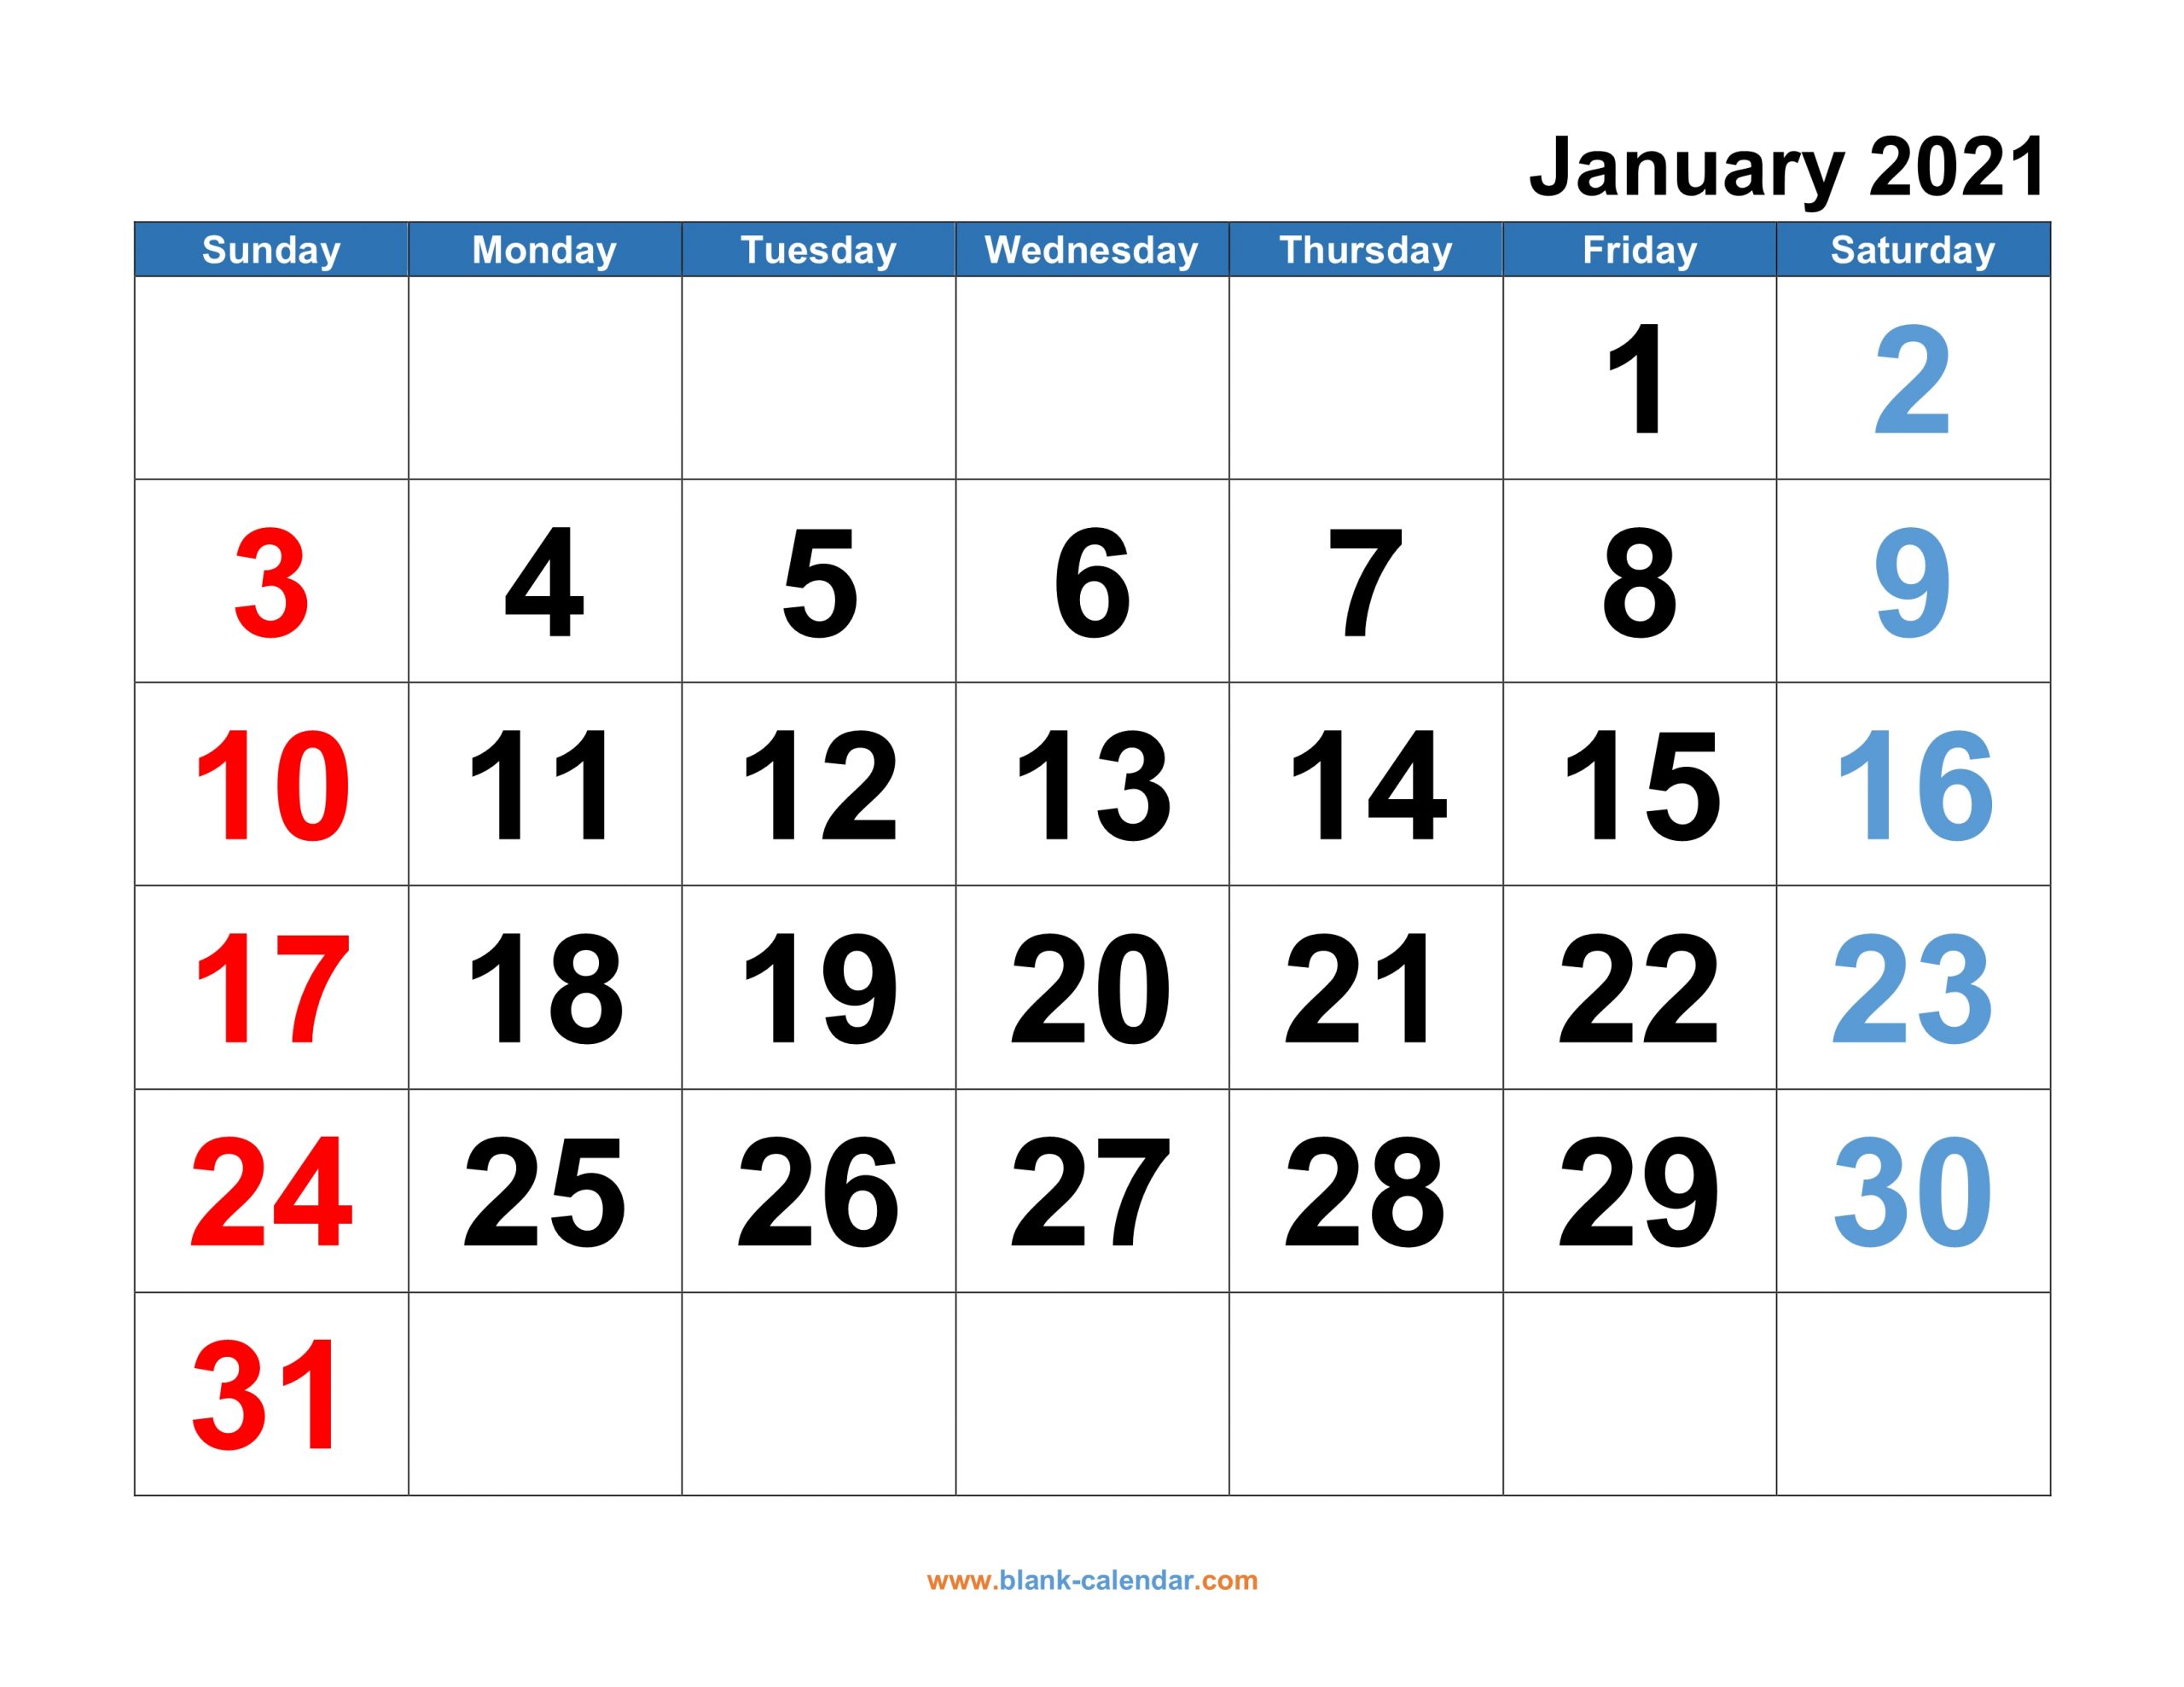 20 January 2021 Calendar Big Numbers Free Download